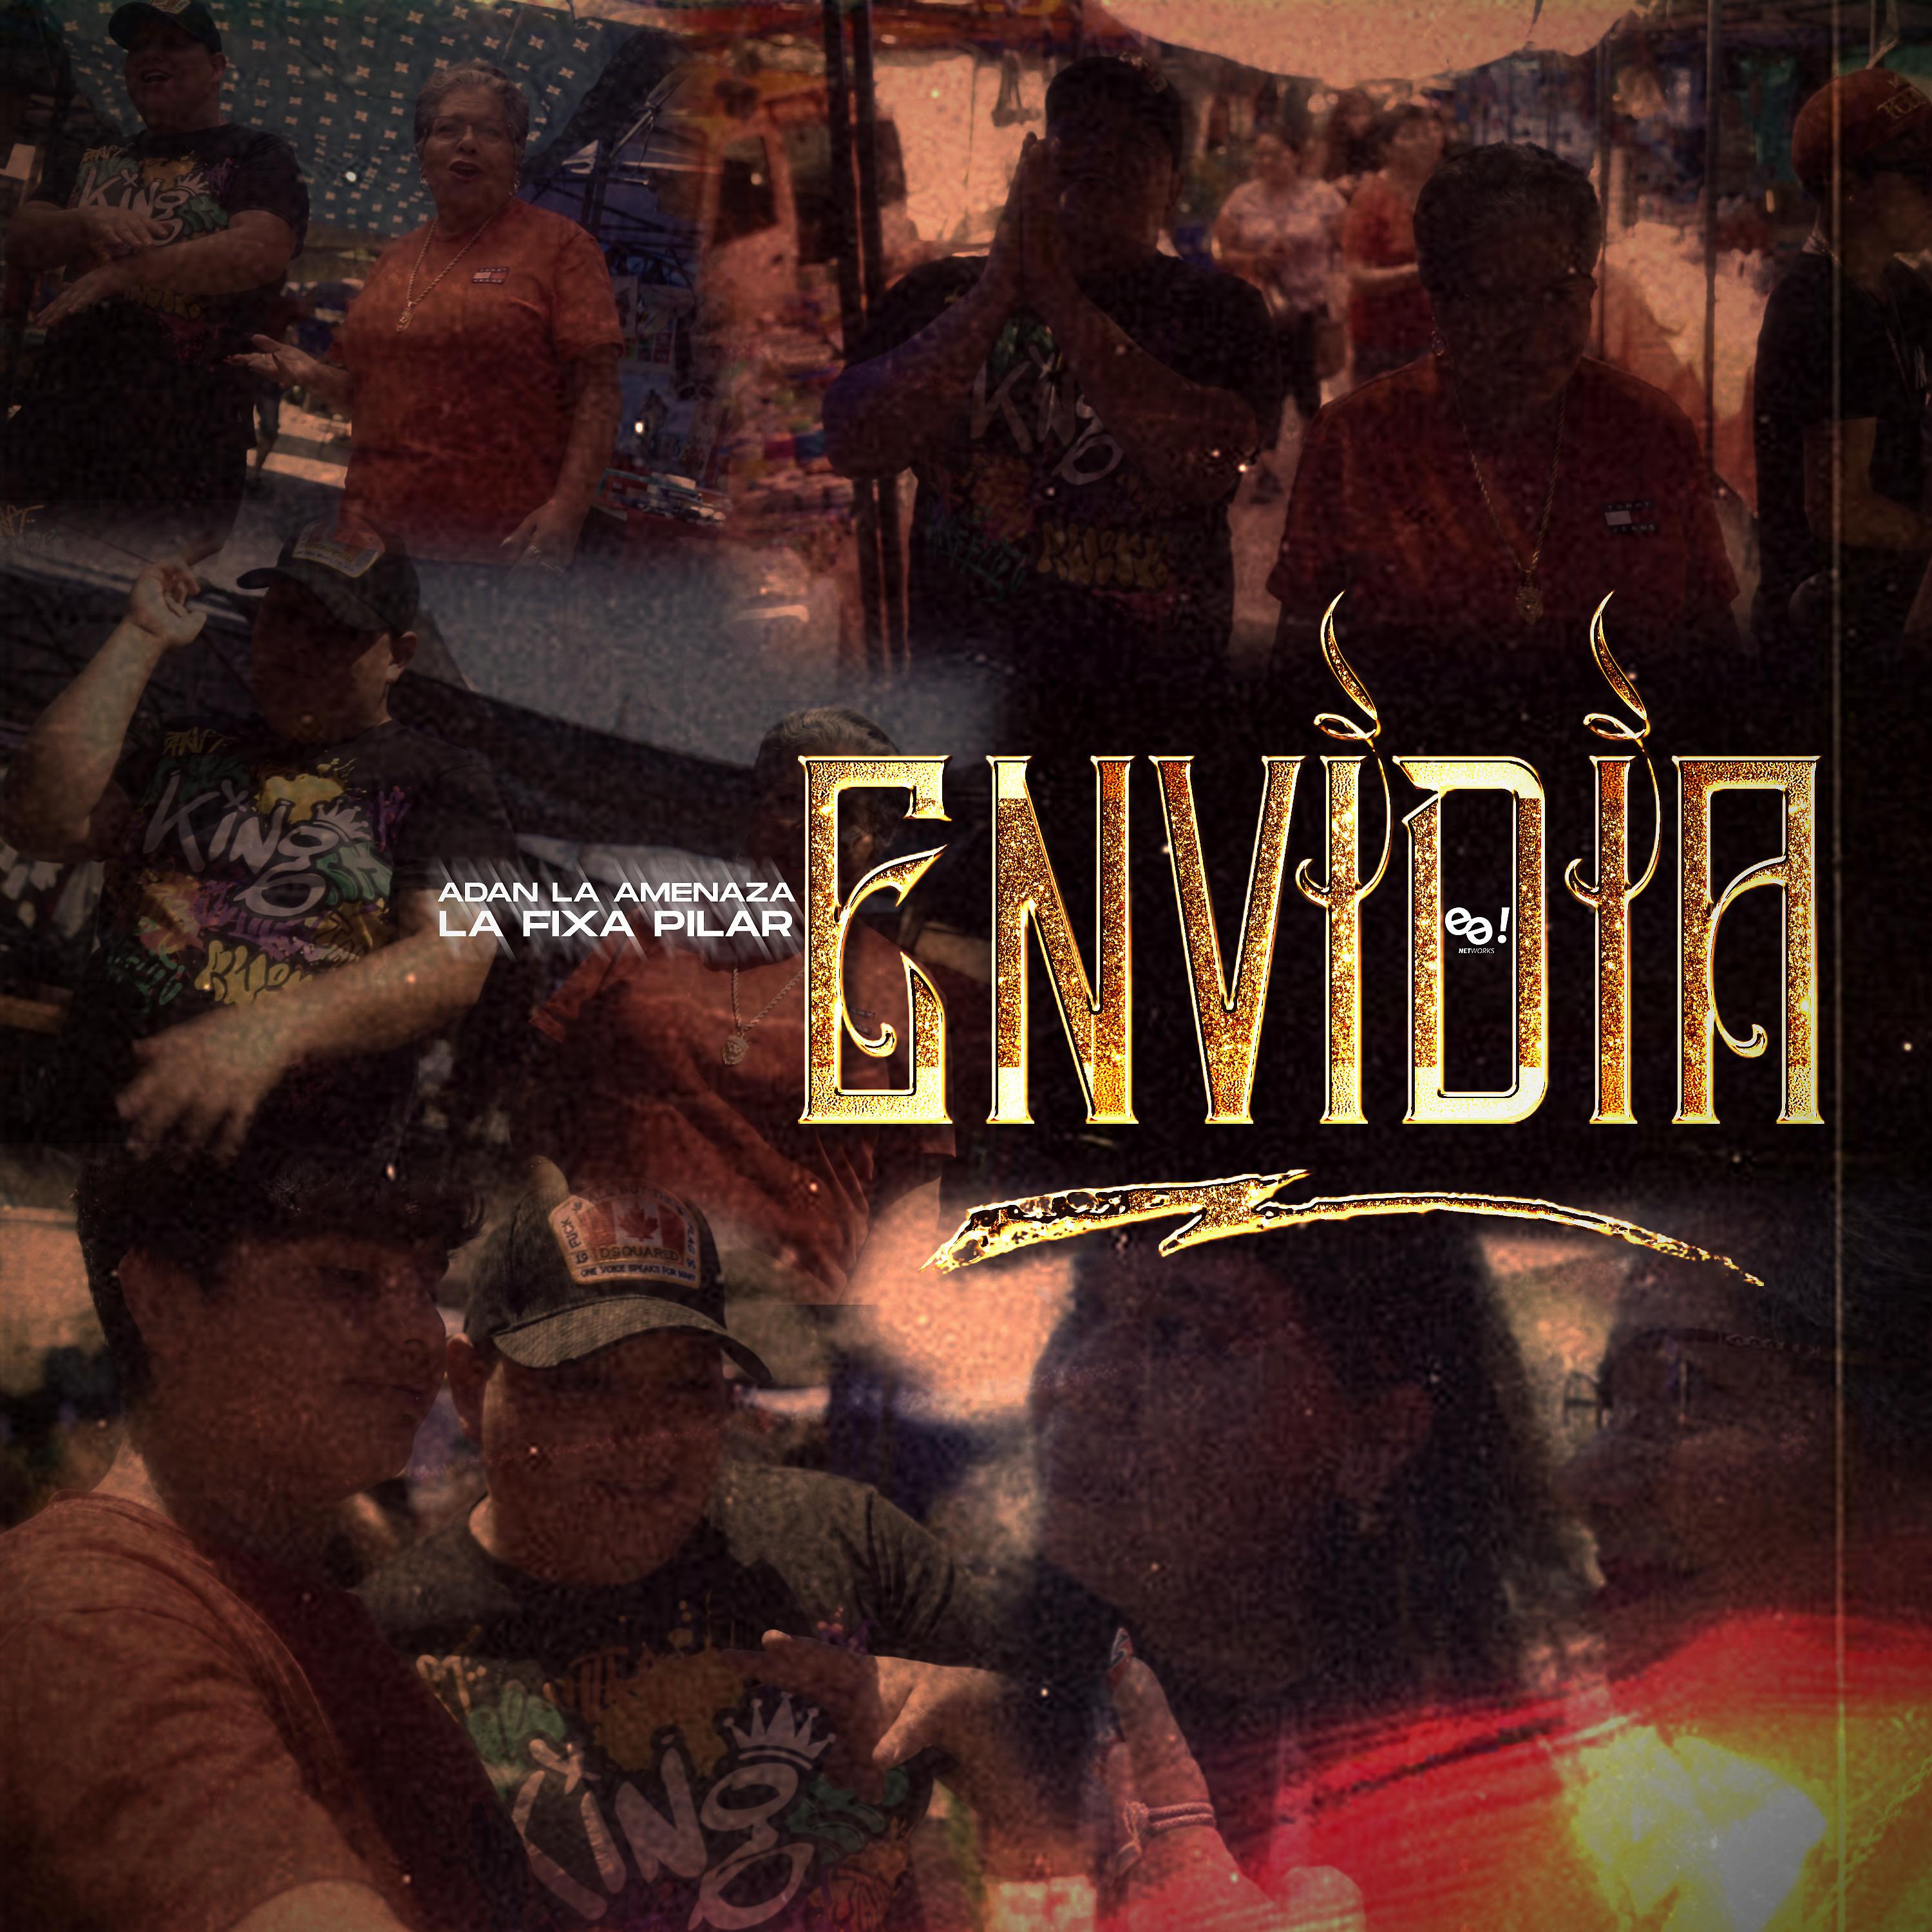 Постер альбома Envidia